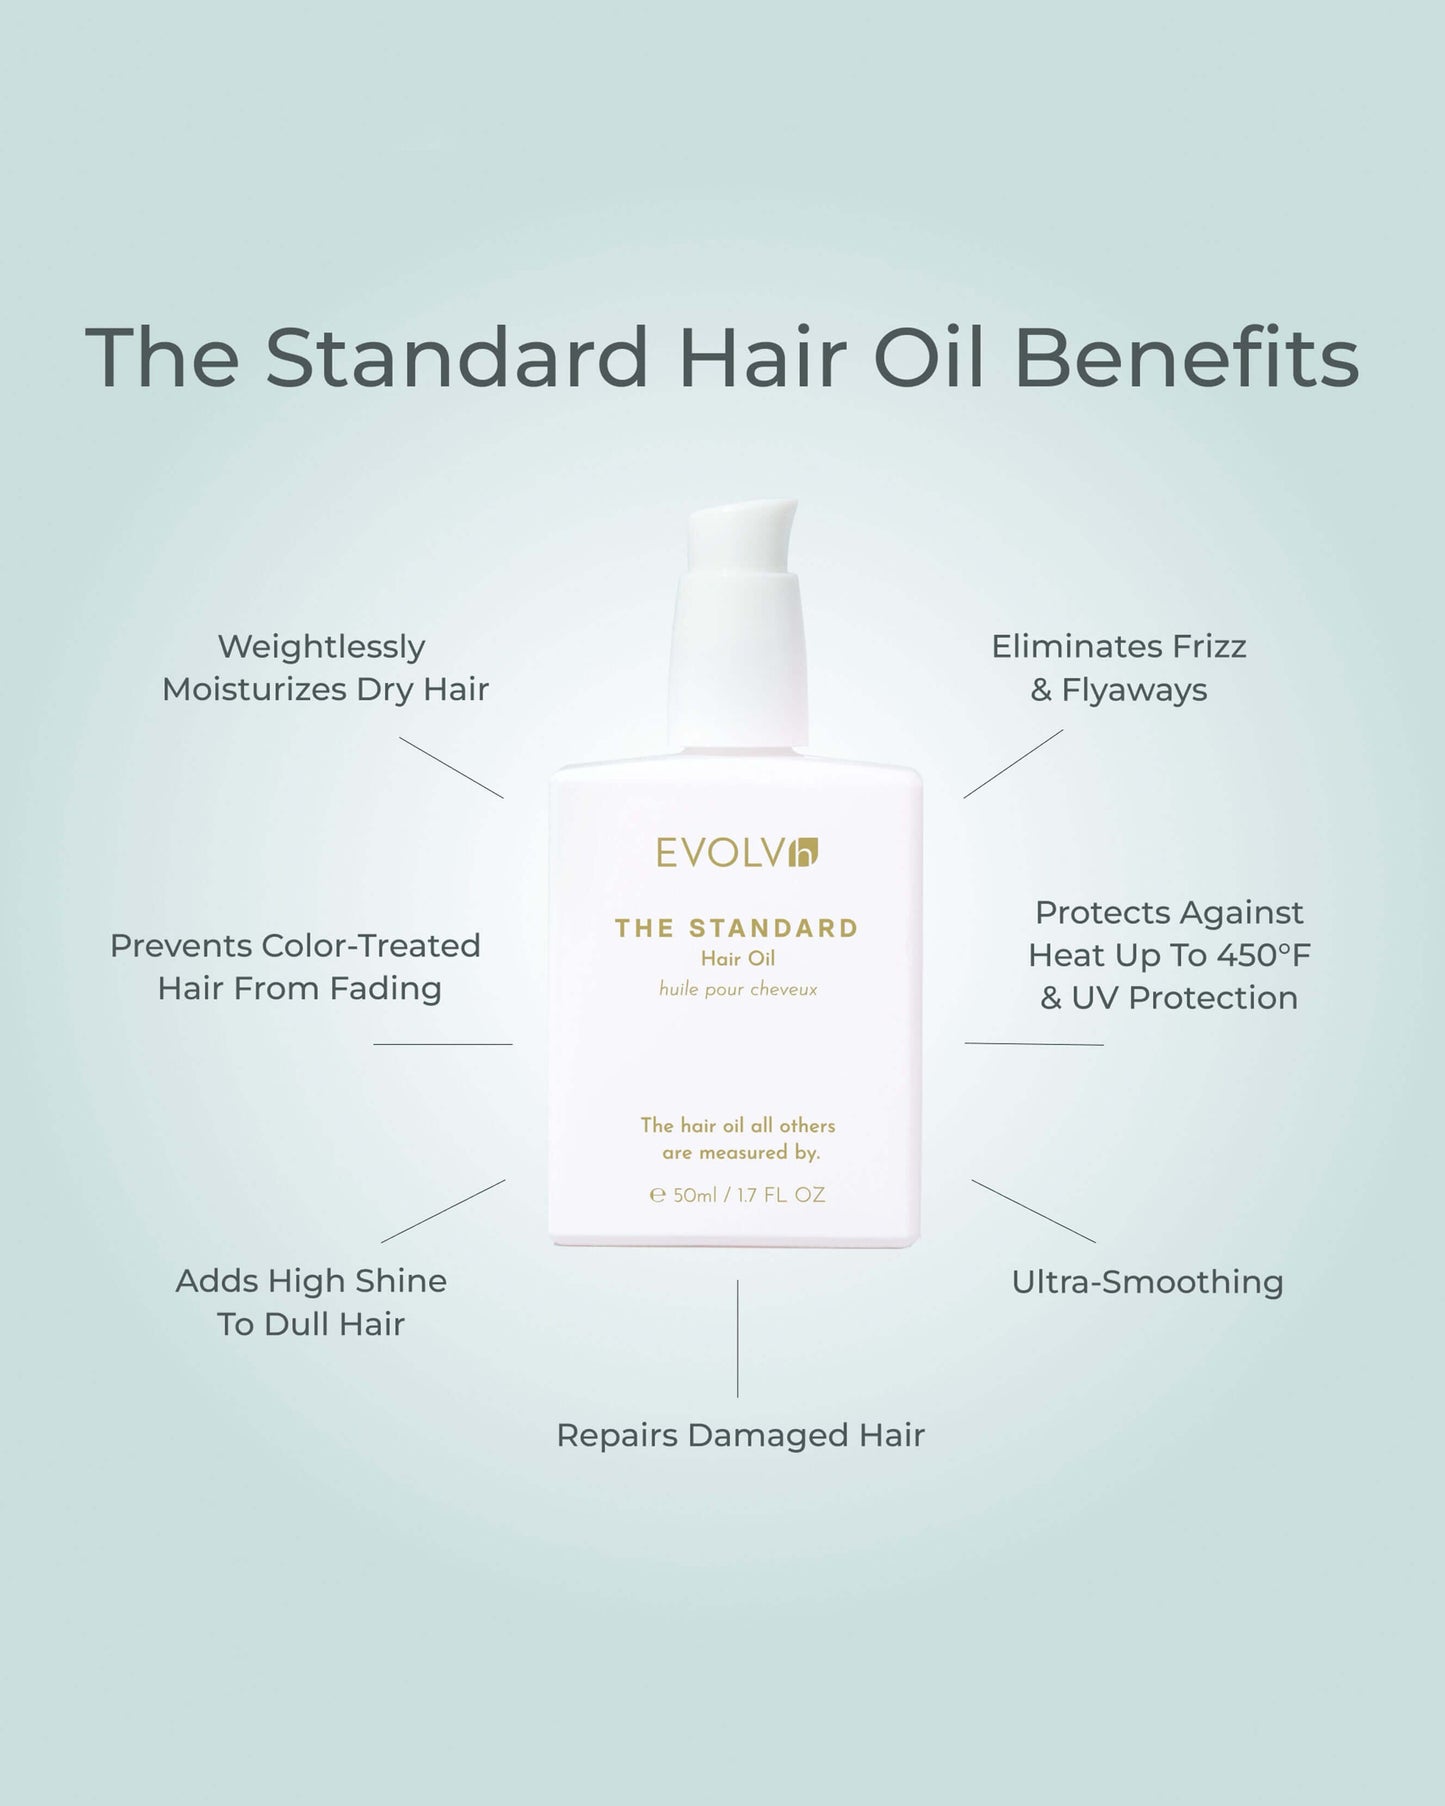 The Standard Hair Oil